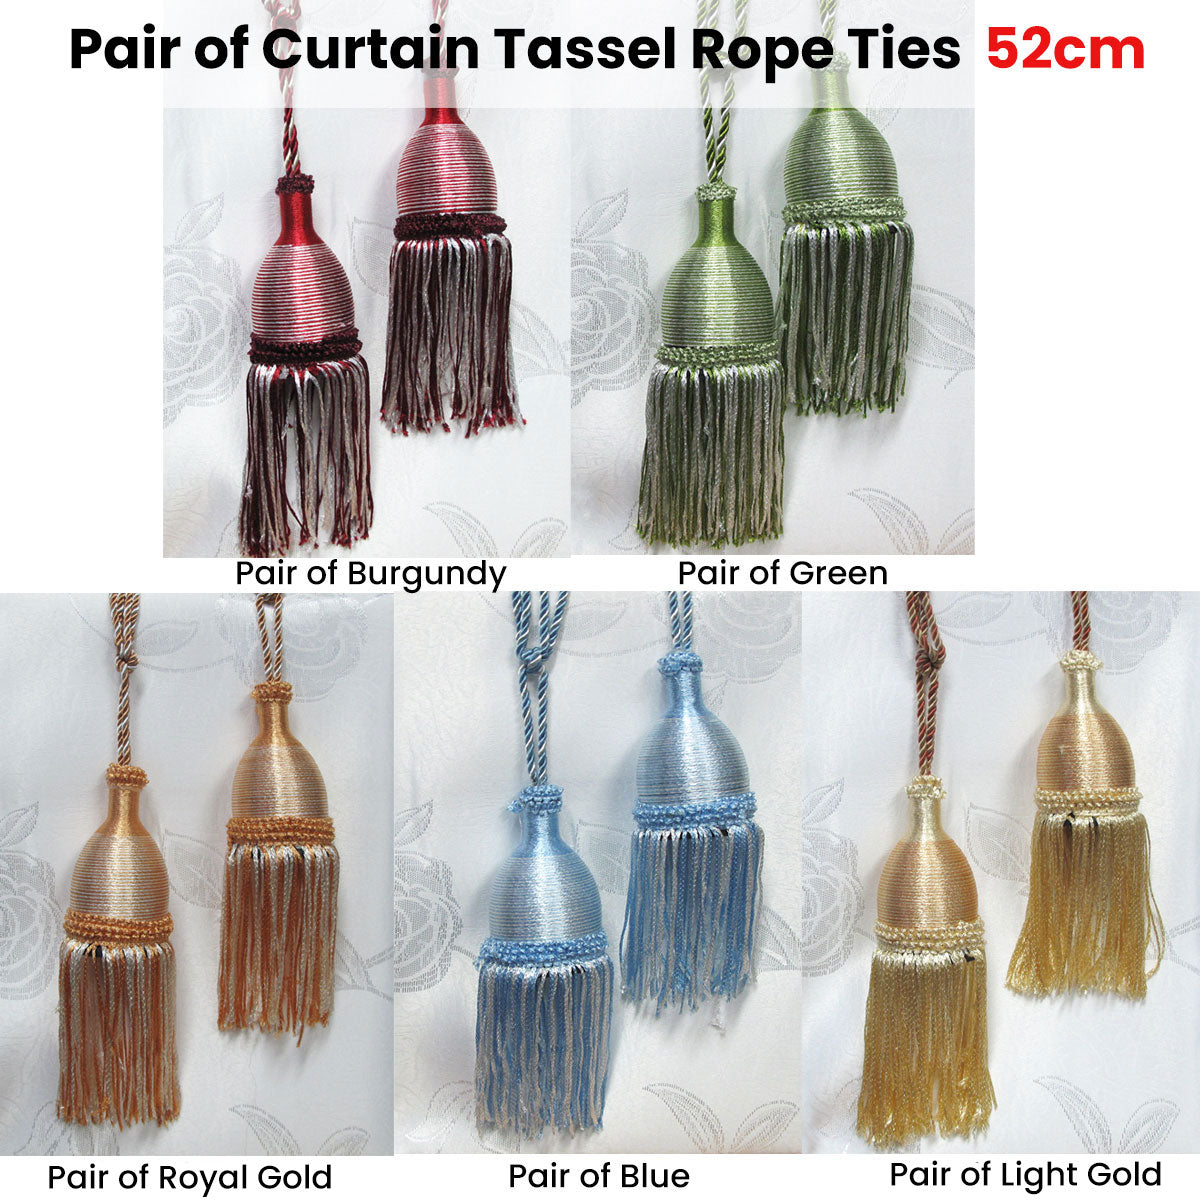 Pair of Curtain Tassel Rope Ties 52cm Light Gold - SILBERSHELL